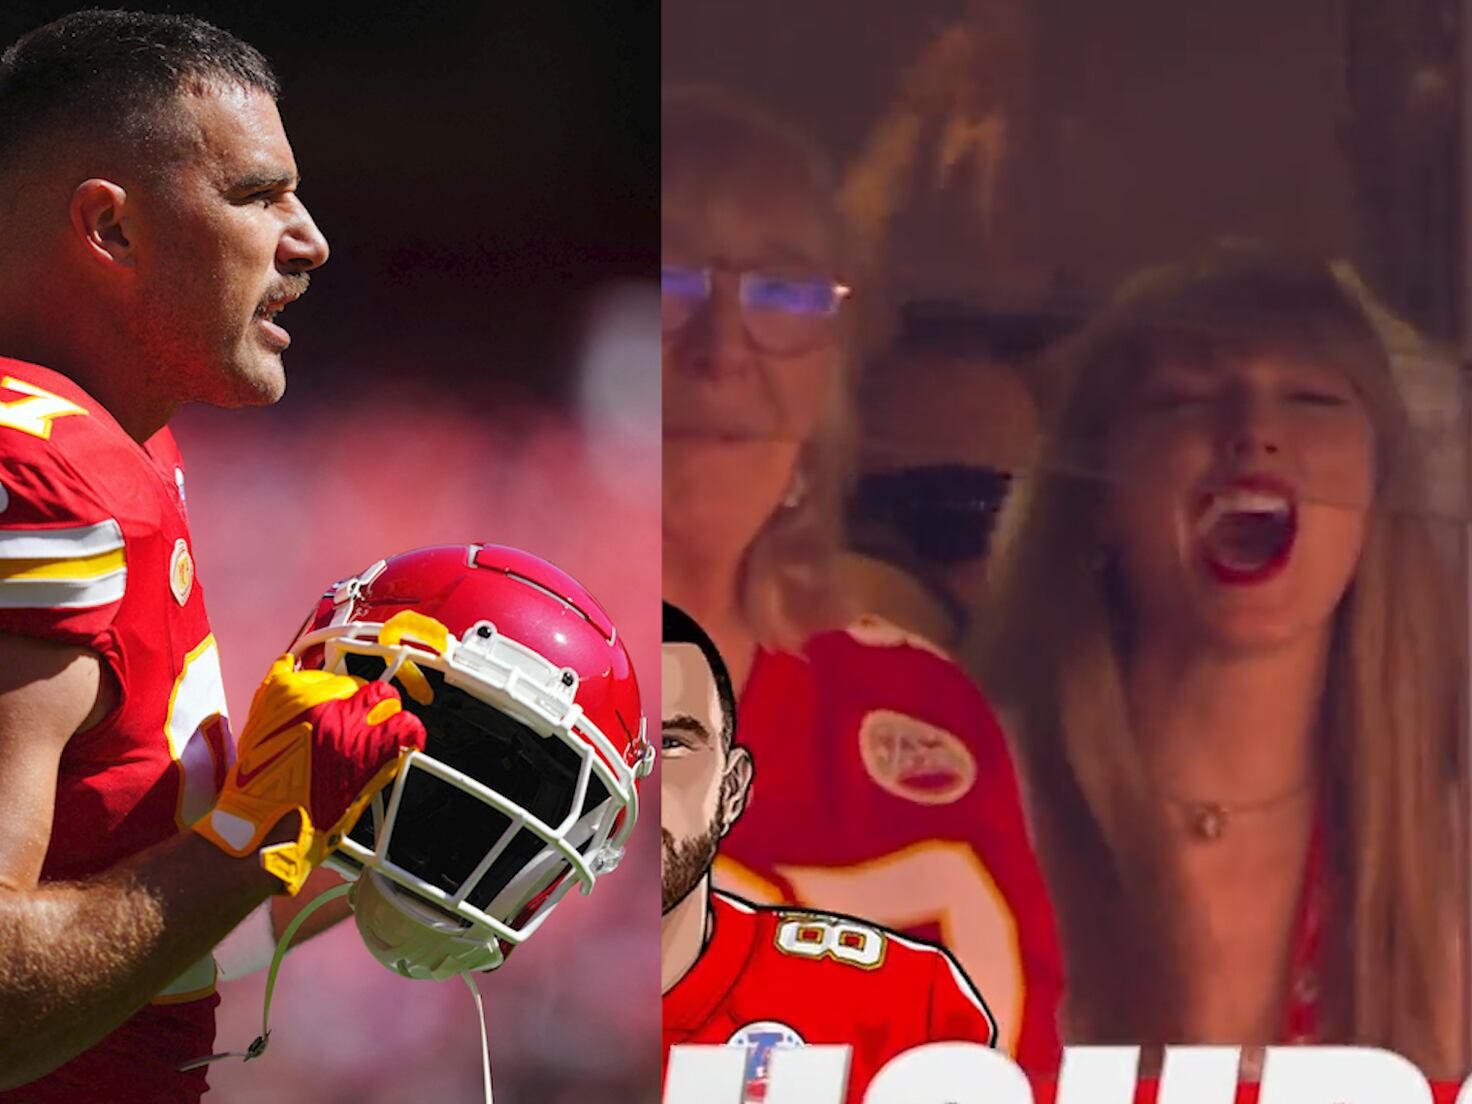 Taylor Swift fans getting into Chiefs NFL football, Travis Kelce